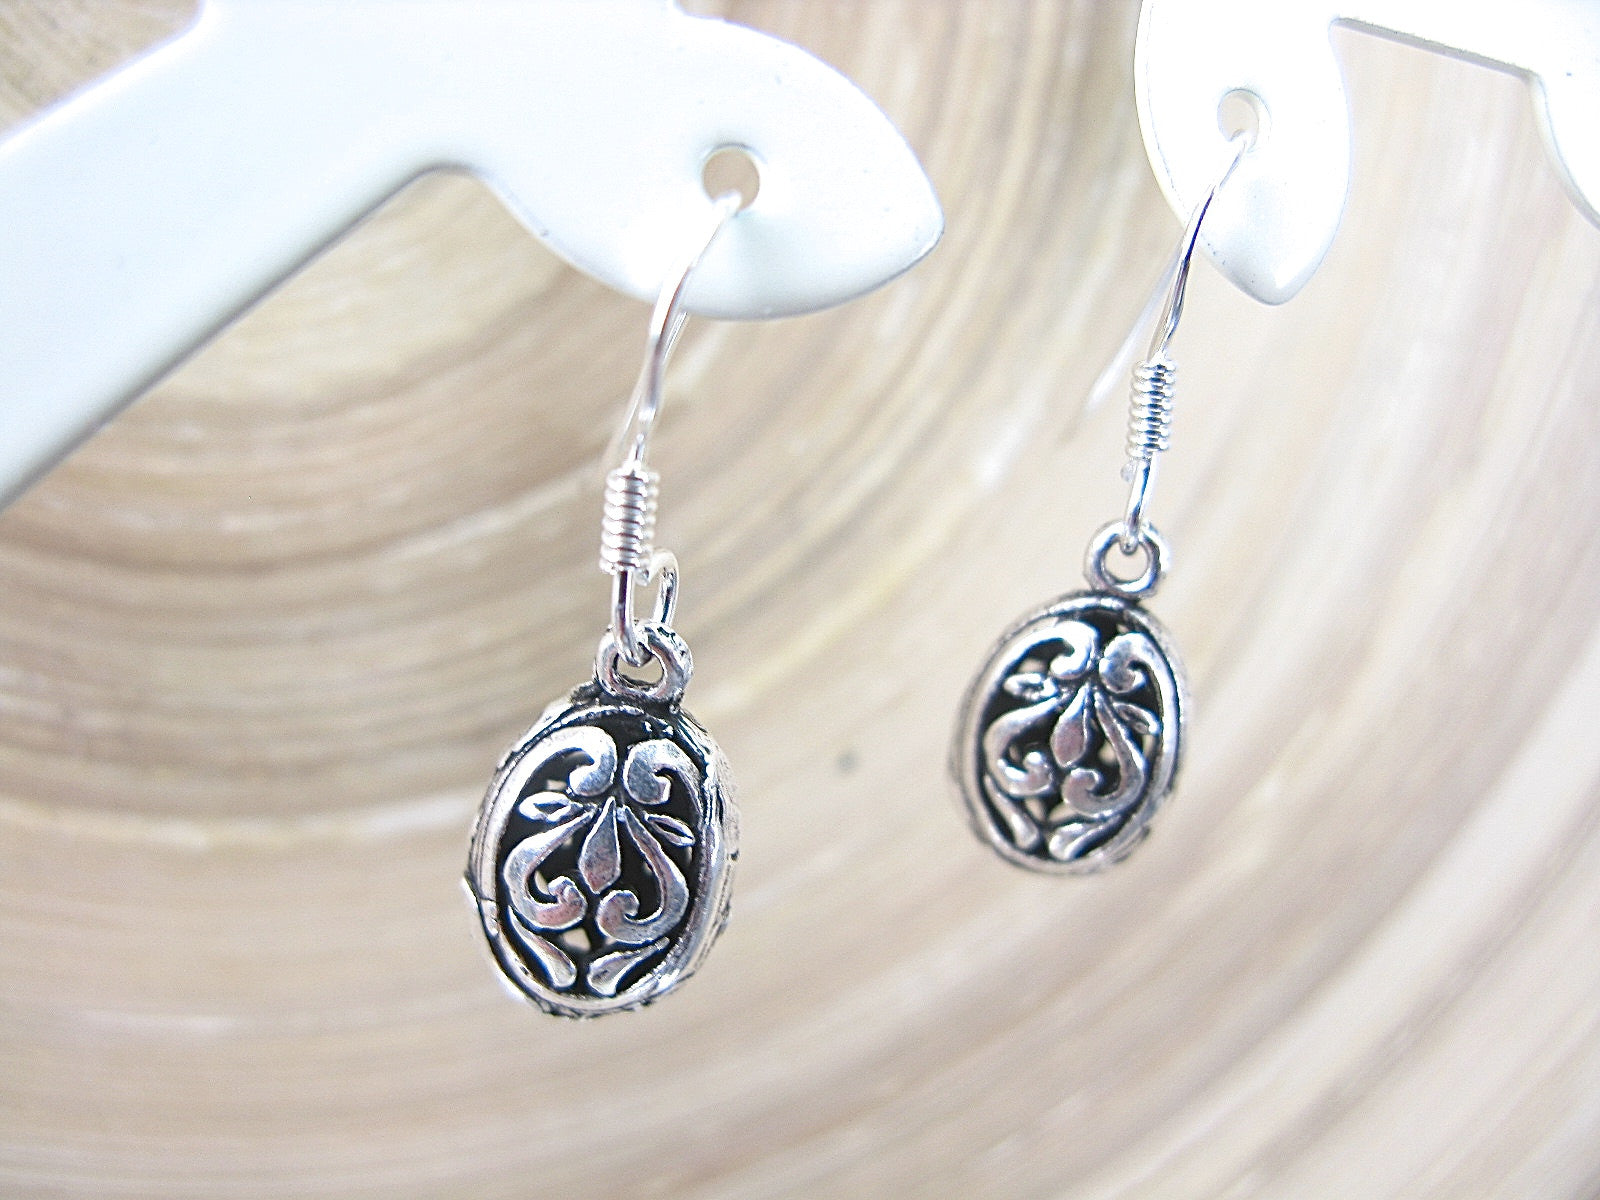 Pear Shaped Filigree Lace Oxidized Earrings in 925 Sterling Silver Earrings Faith Owl - Faith Owl